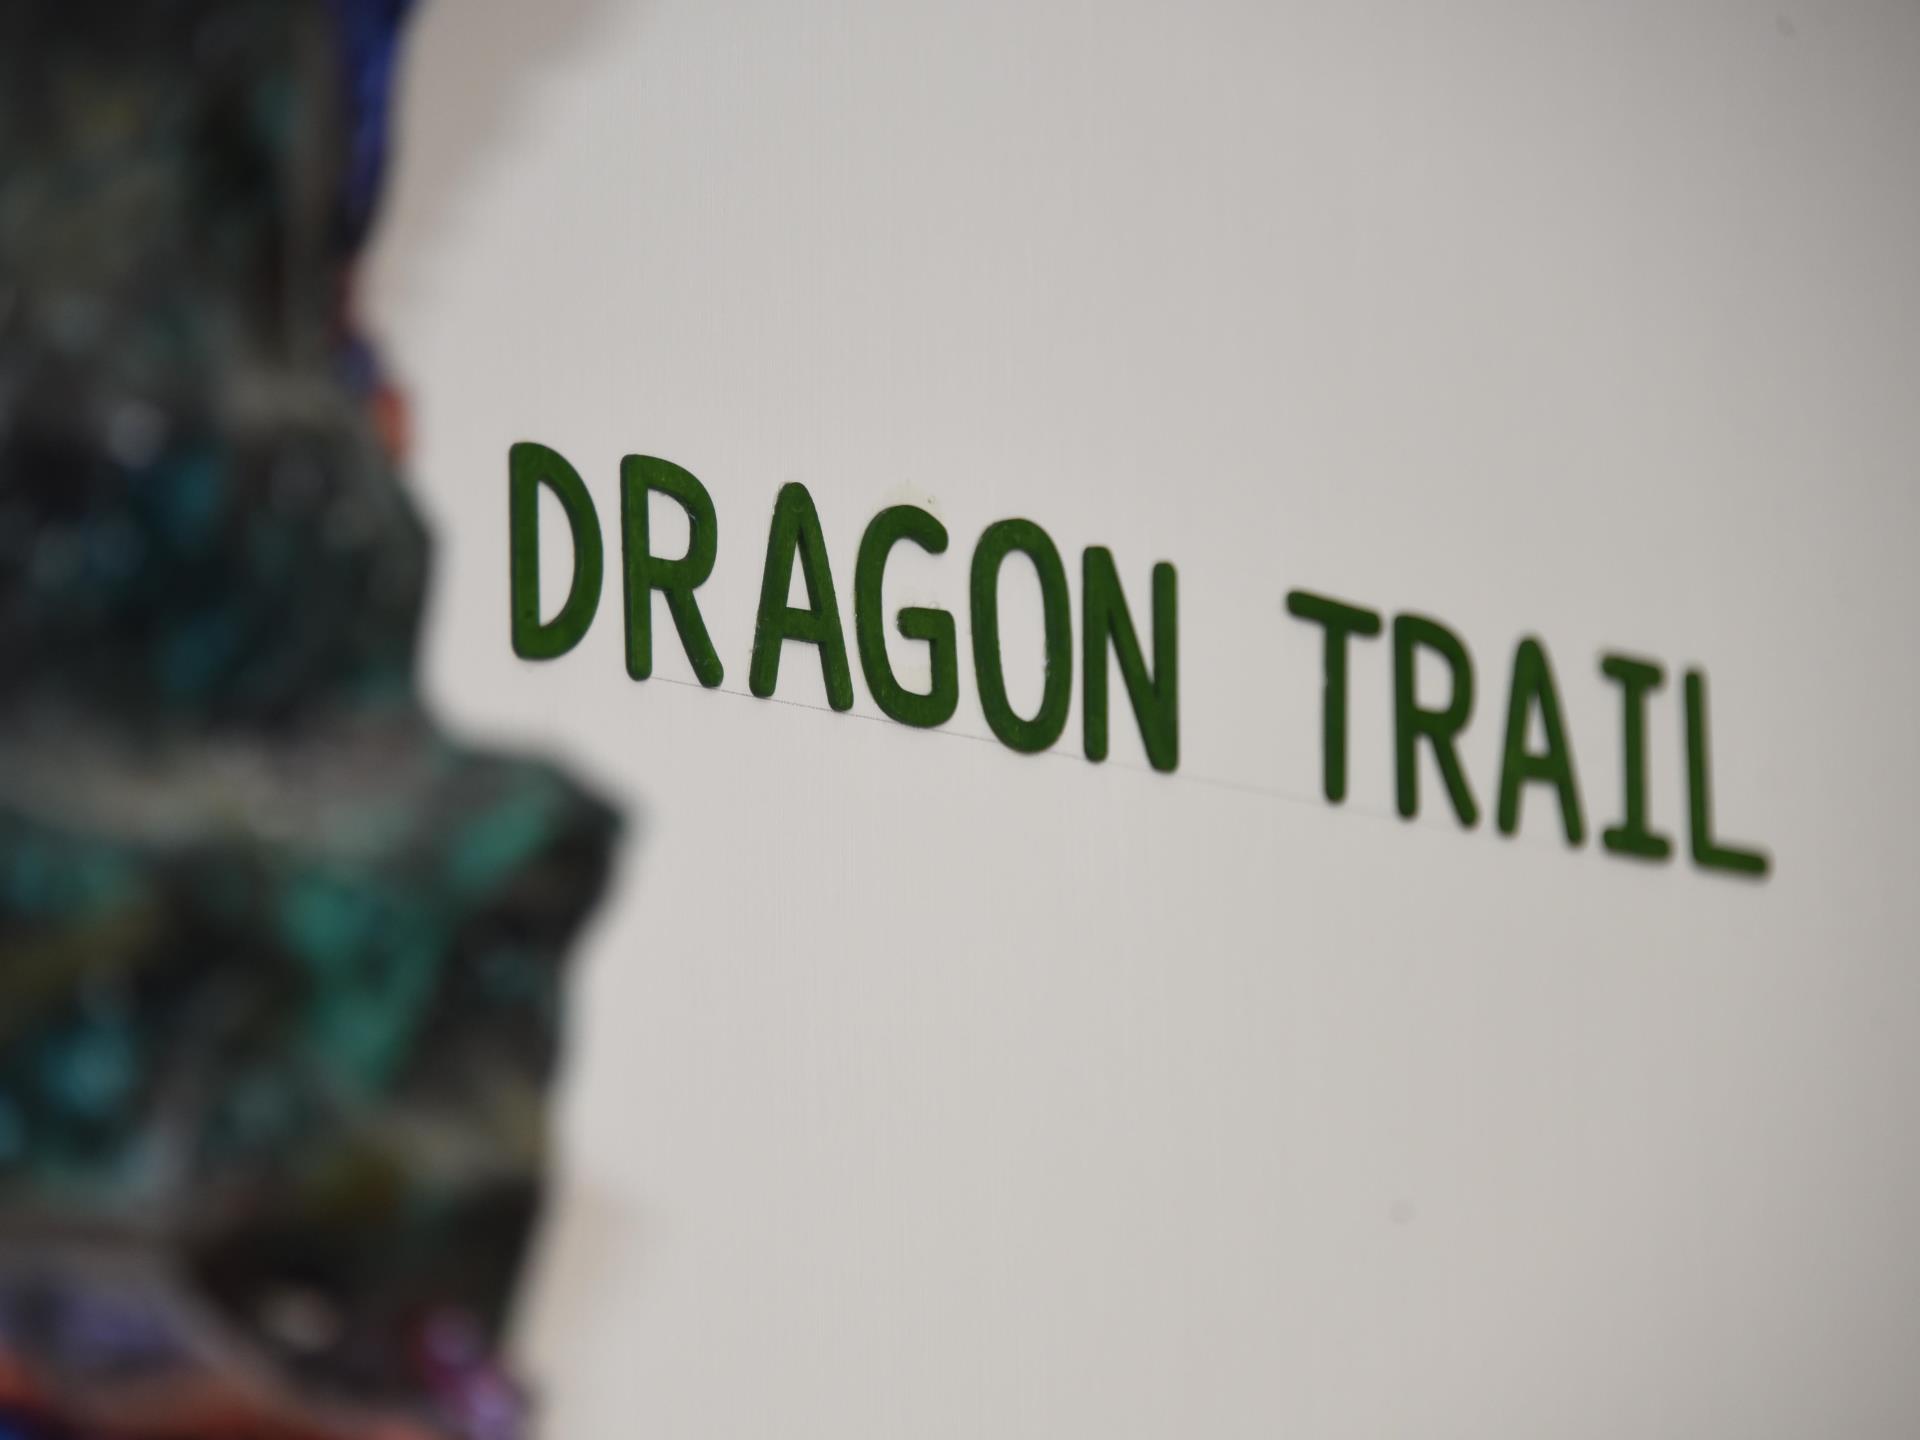 Dragon Trail for kids